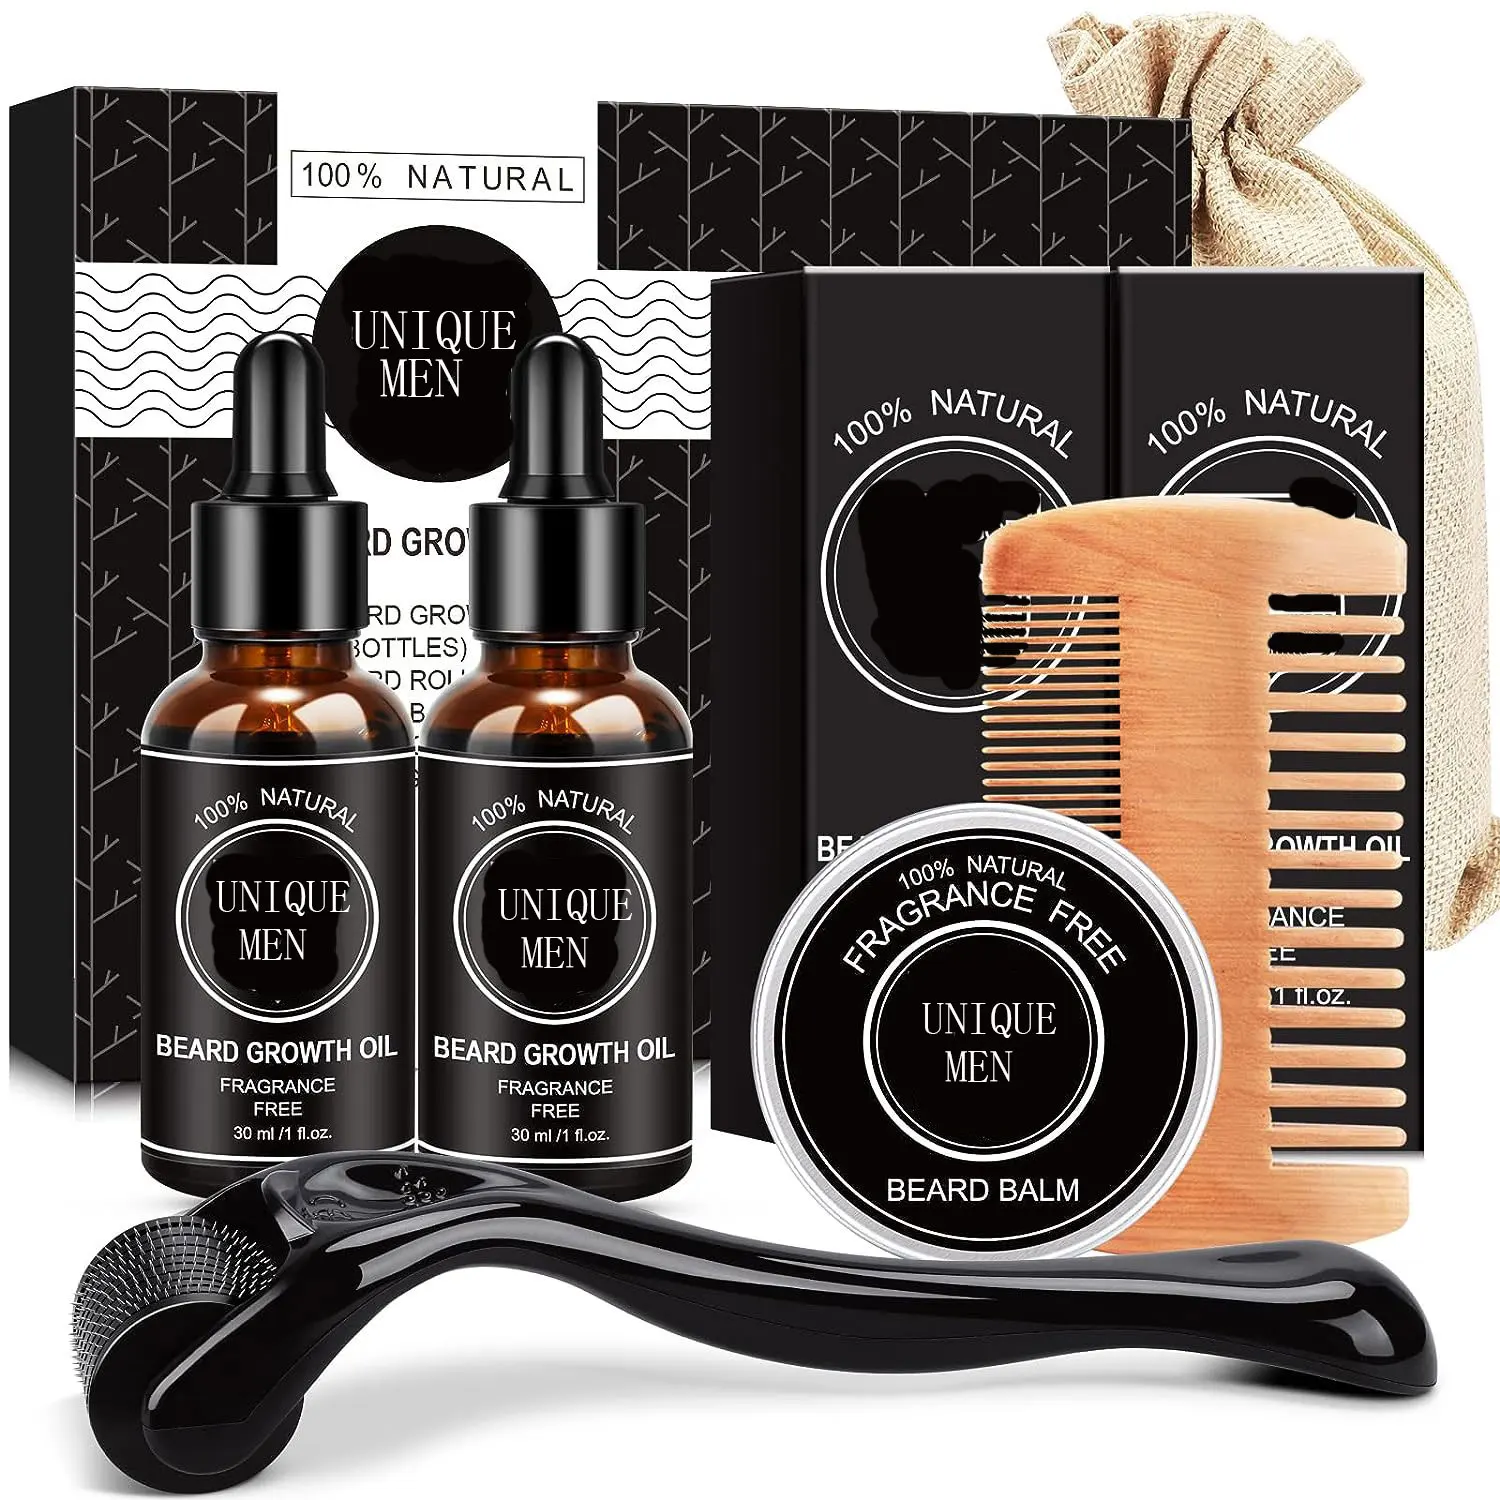 Private Label Micro needle Roller Kit Beard Oil Beard Balm Custom Wooden Comb Men Birthday Christmas Gifts